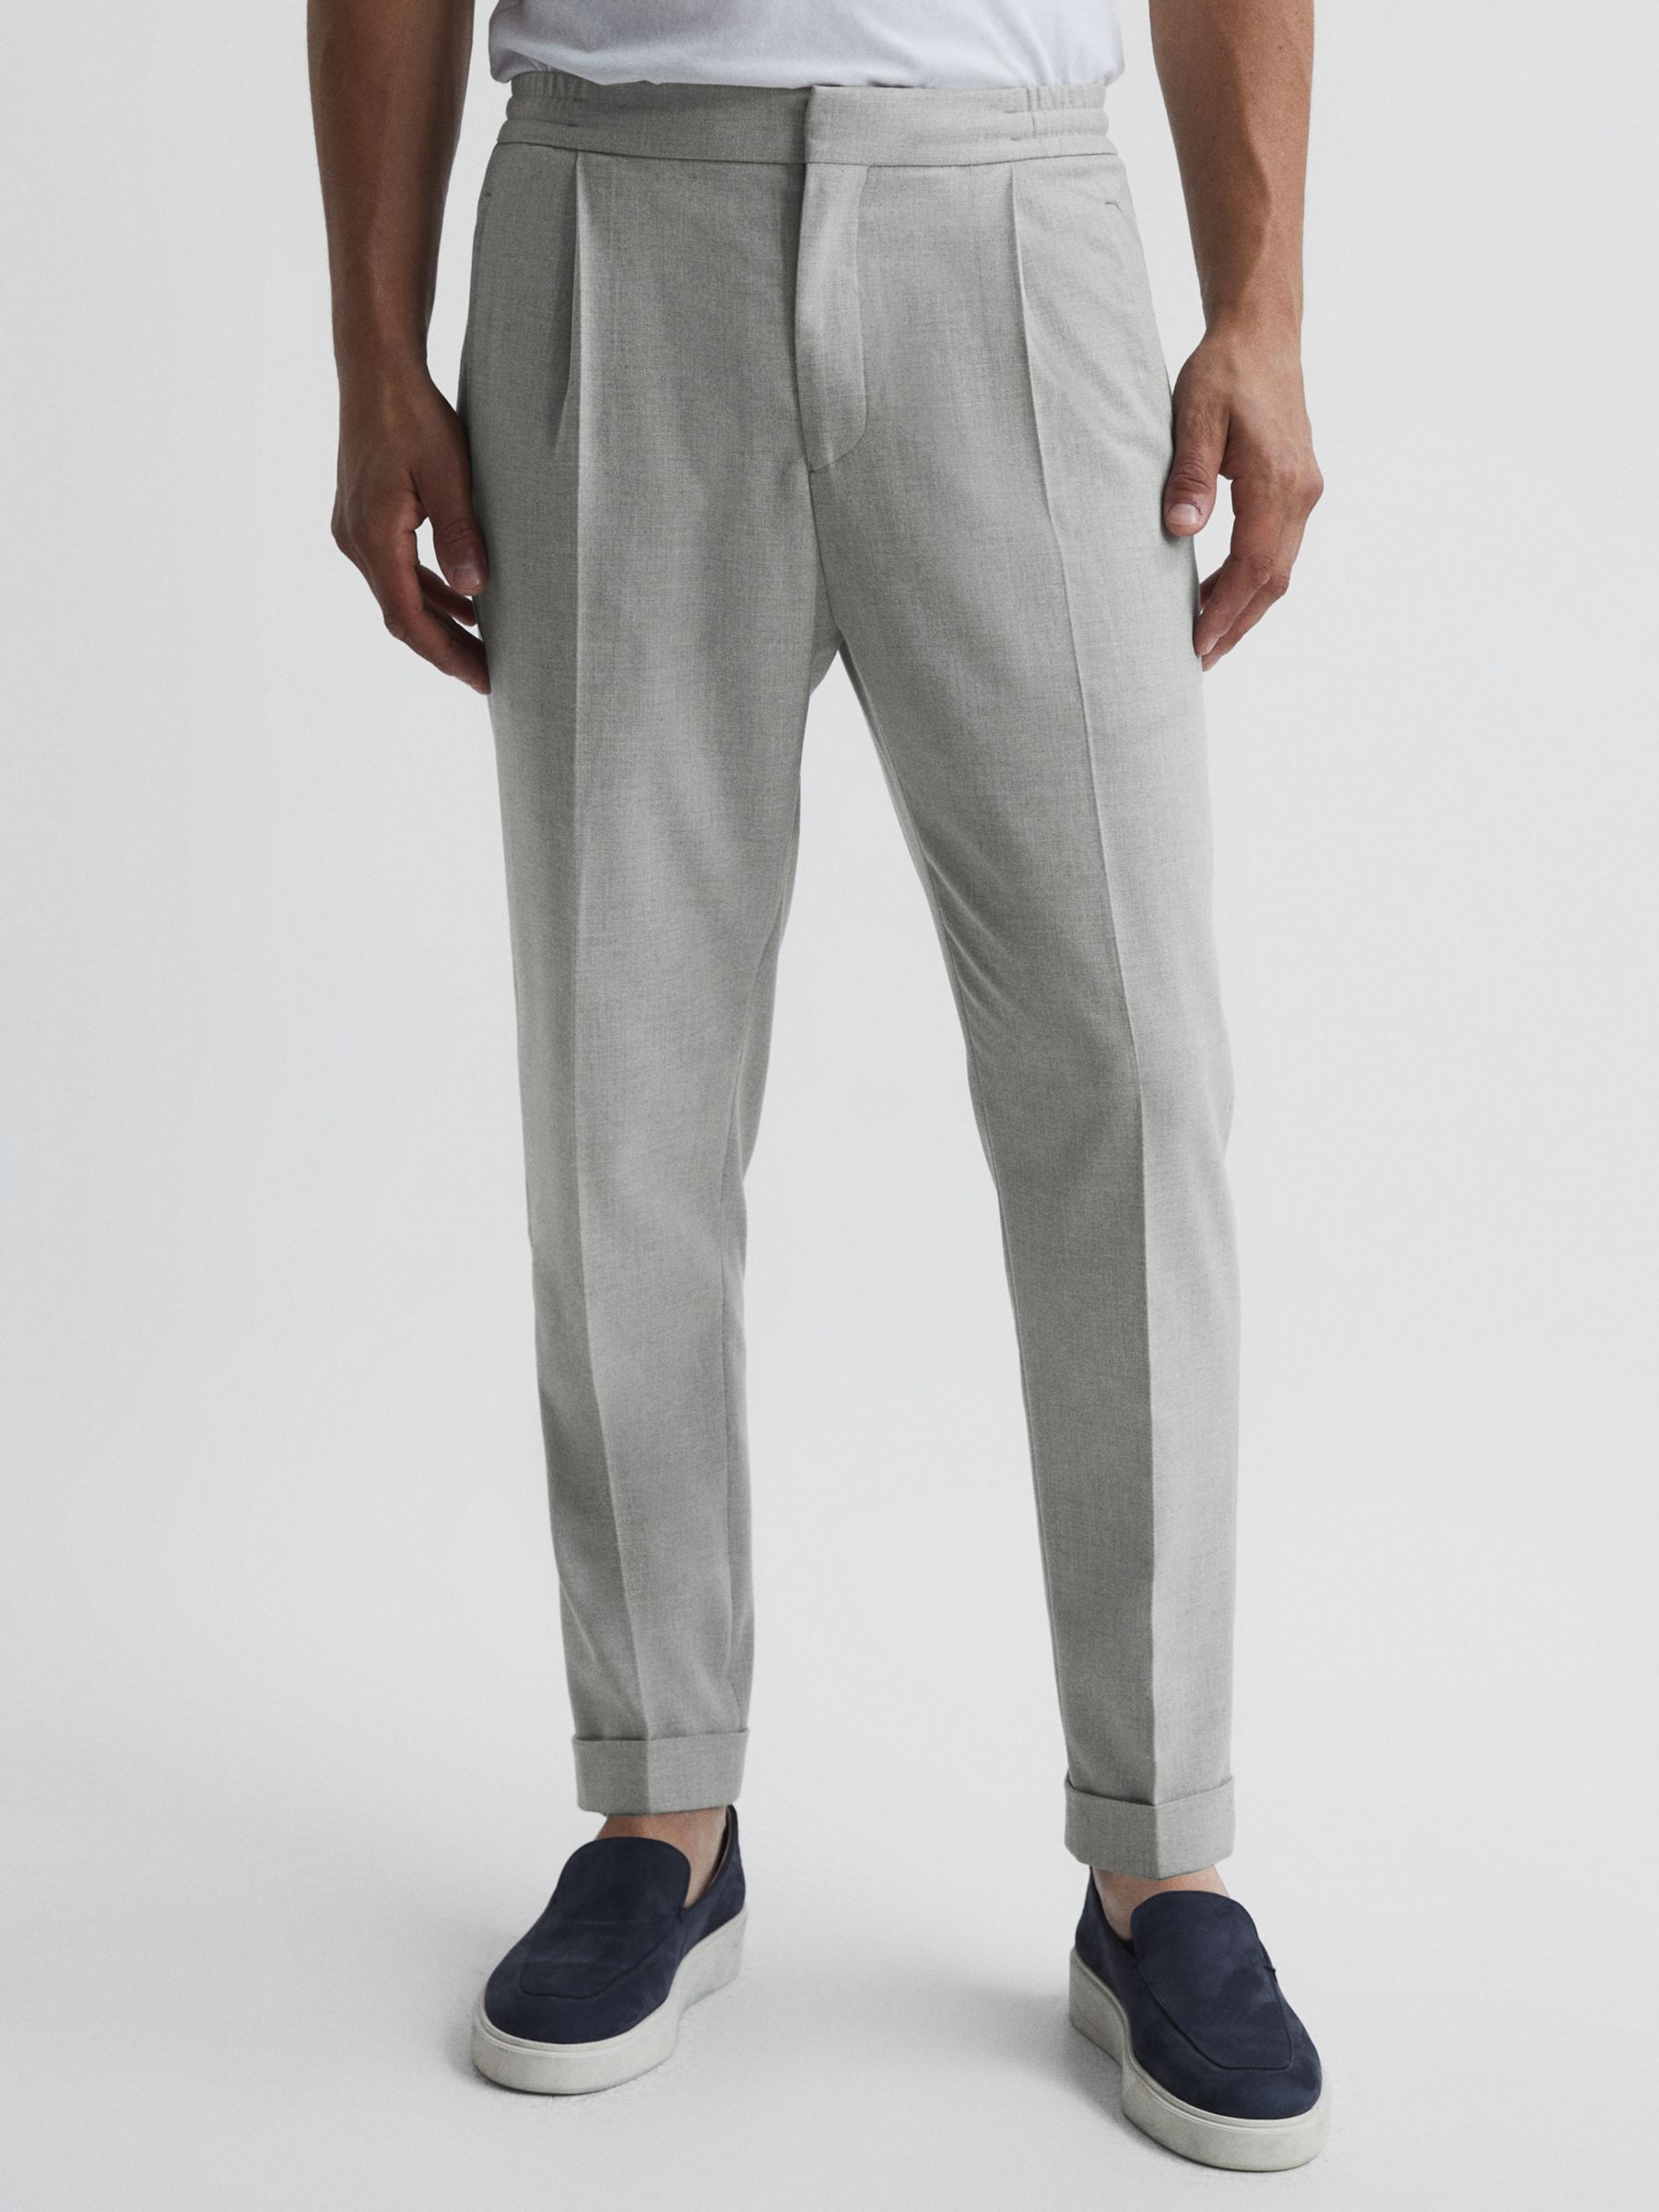 Reiss Brighton Pleated Slim Trousers, Soft Grey at John Lewis & Partners